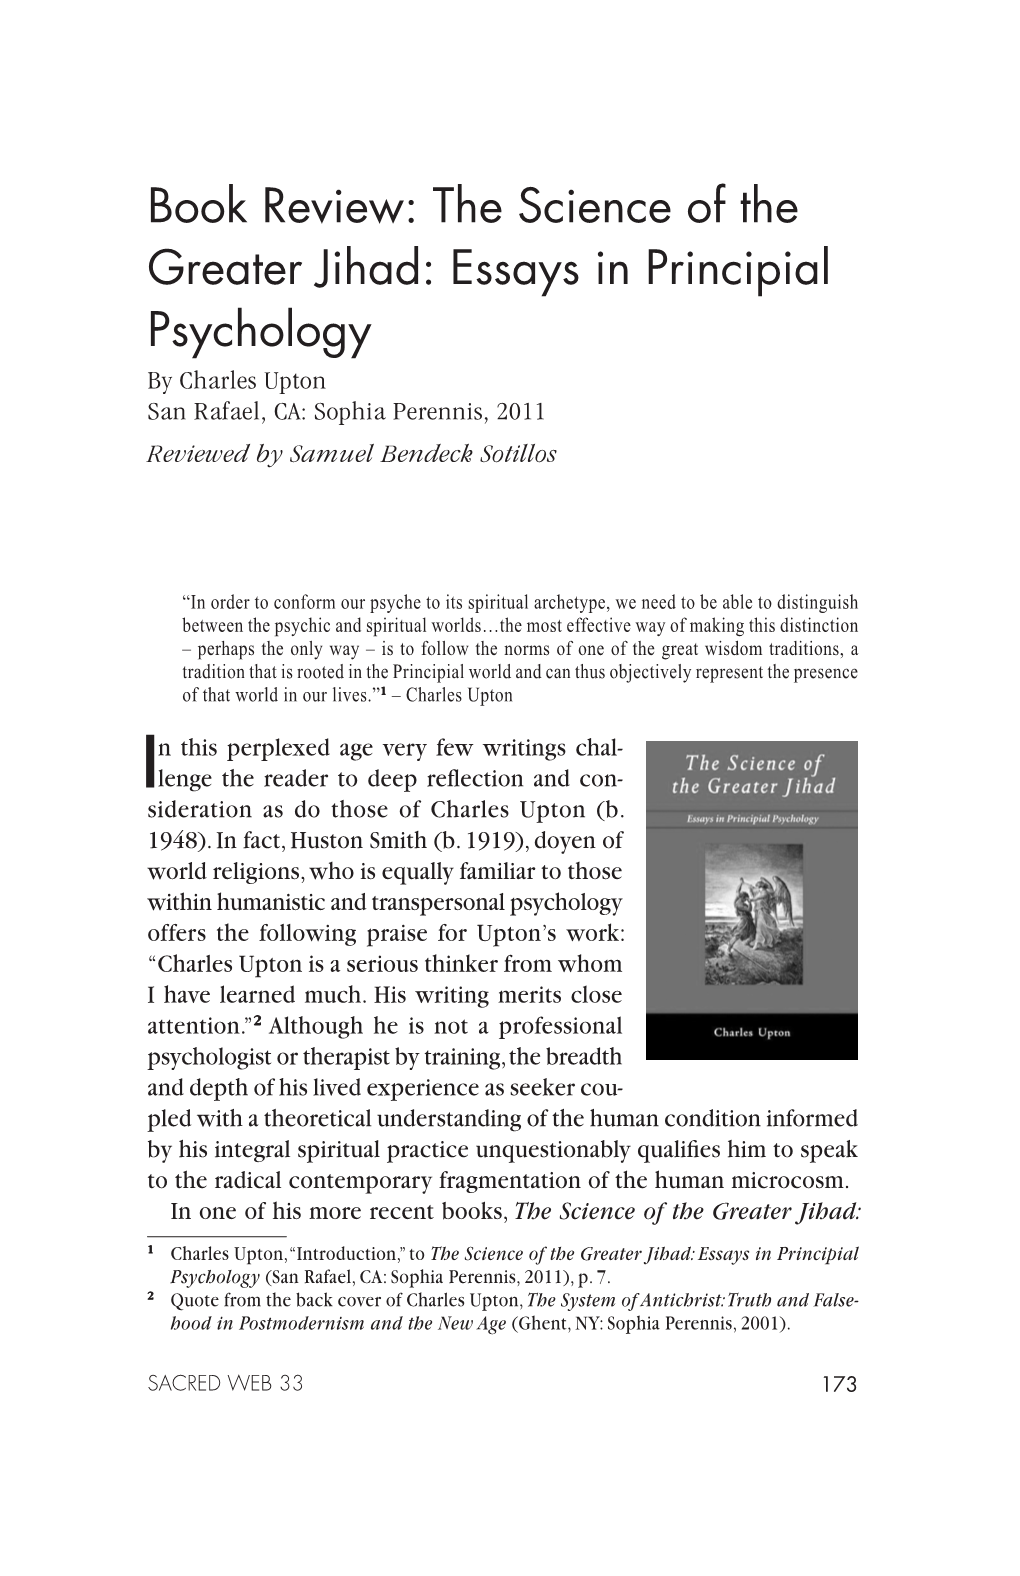 The Science of the Greater Jihad: Essays in Principial Psychology by Charles Upton San Rafael, CA: Sophia Perennis, 2011 Reviewed by Samuel Bendeck Sotillos